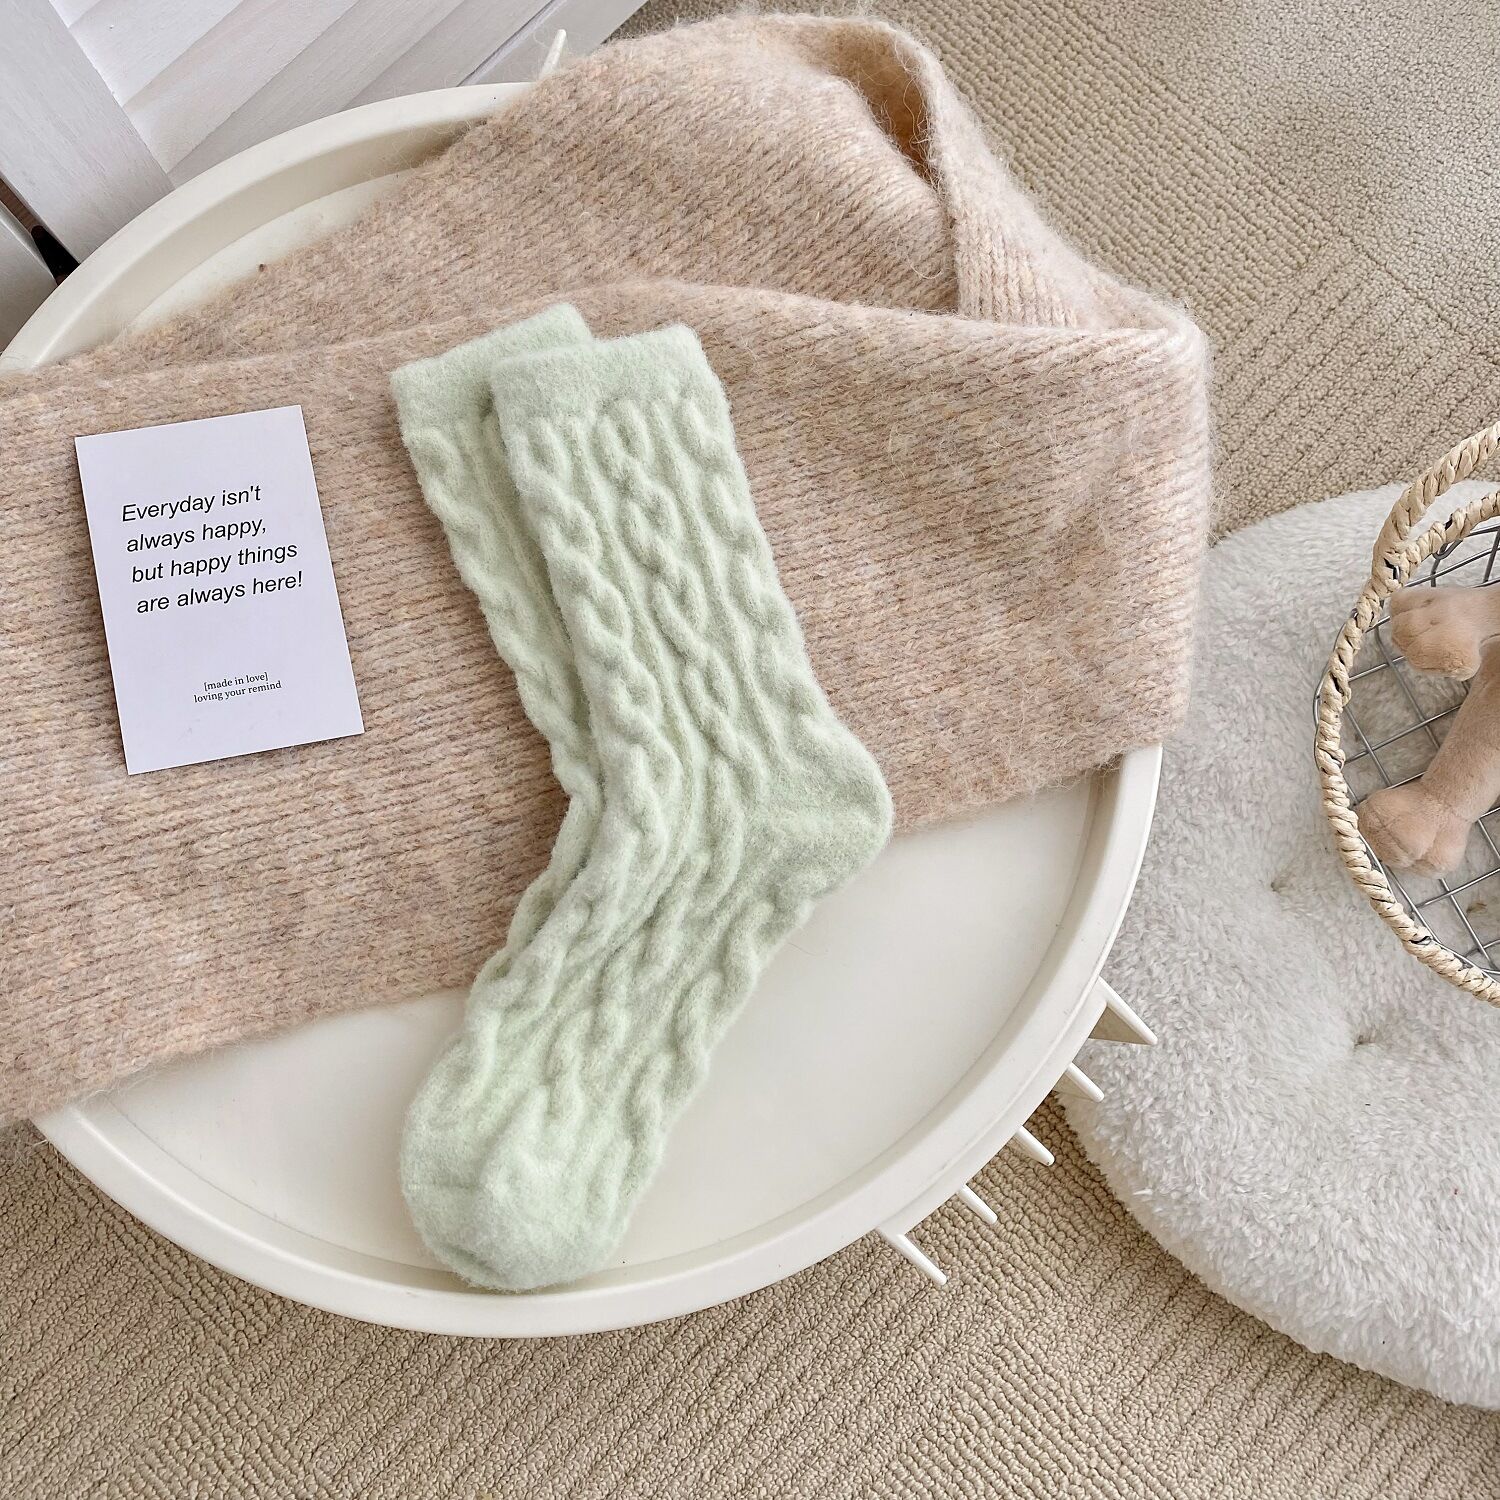 4pairs Women's Fuzzy Socks Cute Animal Plush Socks Slipper Winter Fluffy  Cozy Cabin Warm Soft Comfy Home Socks, Free Shipping For New Users